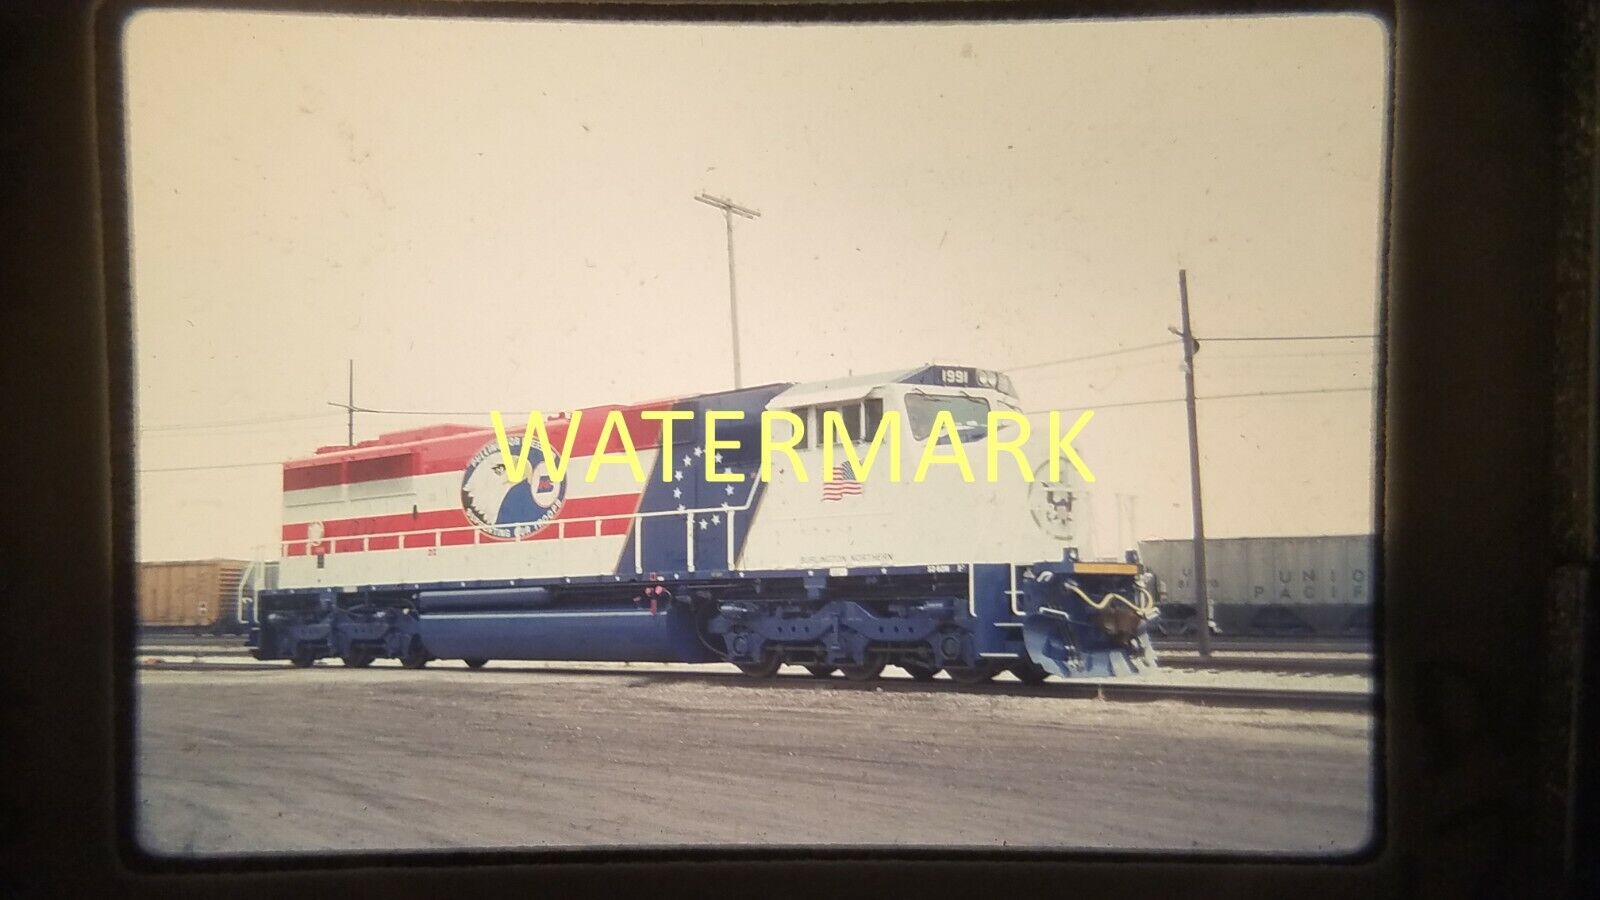 DV17 TRAIN ENGINE LOCOMOTIVE 35MM SLIDE RAILROAD BNSD 1991, KANSAS CITY, MO 1991